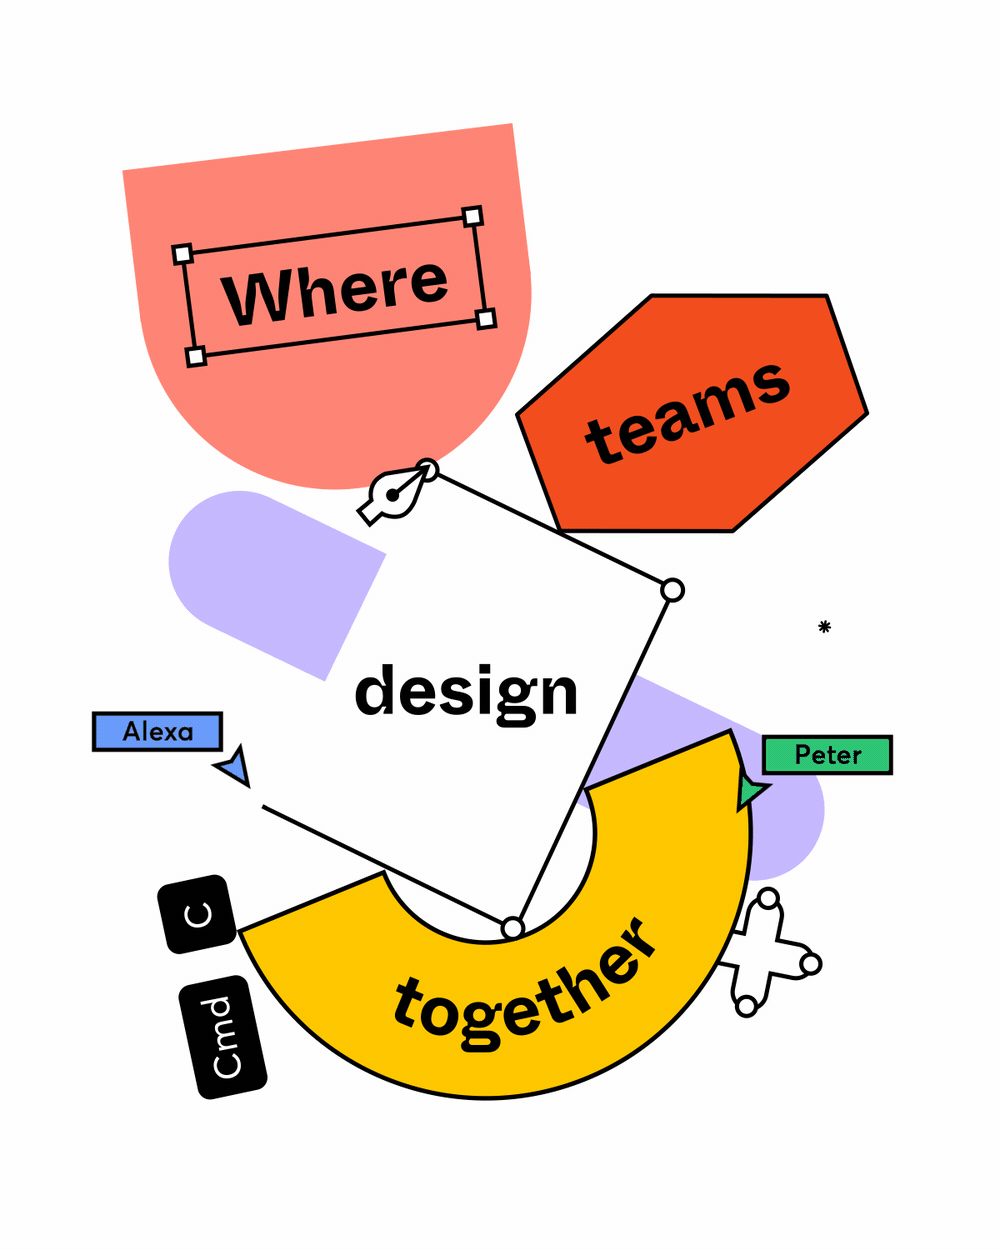 Where_Teams_Design_Together_1